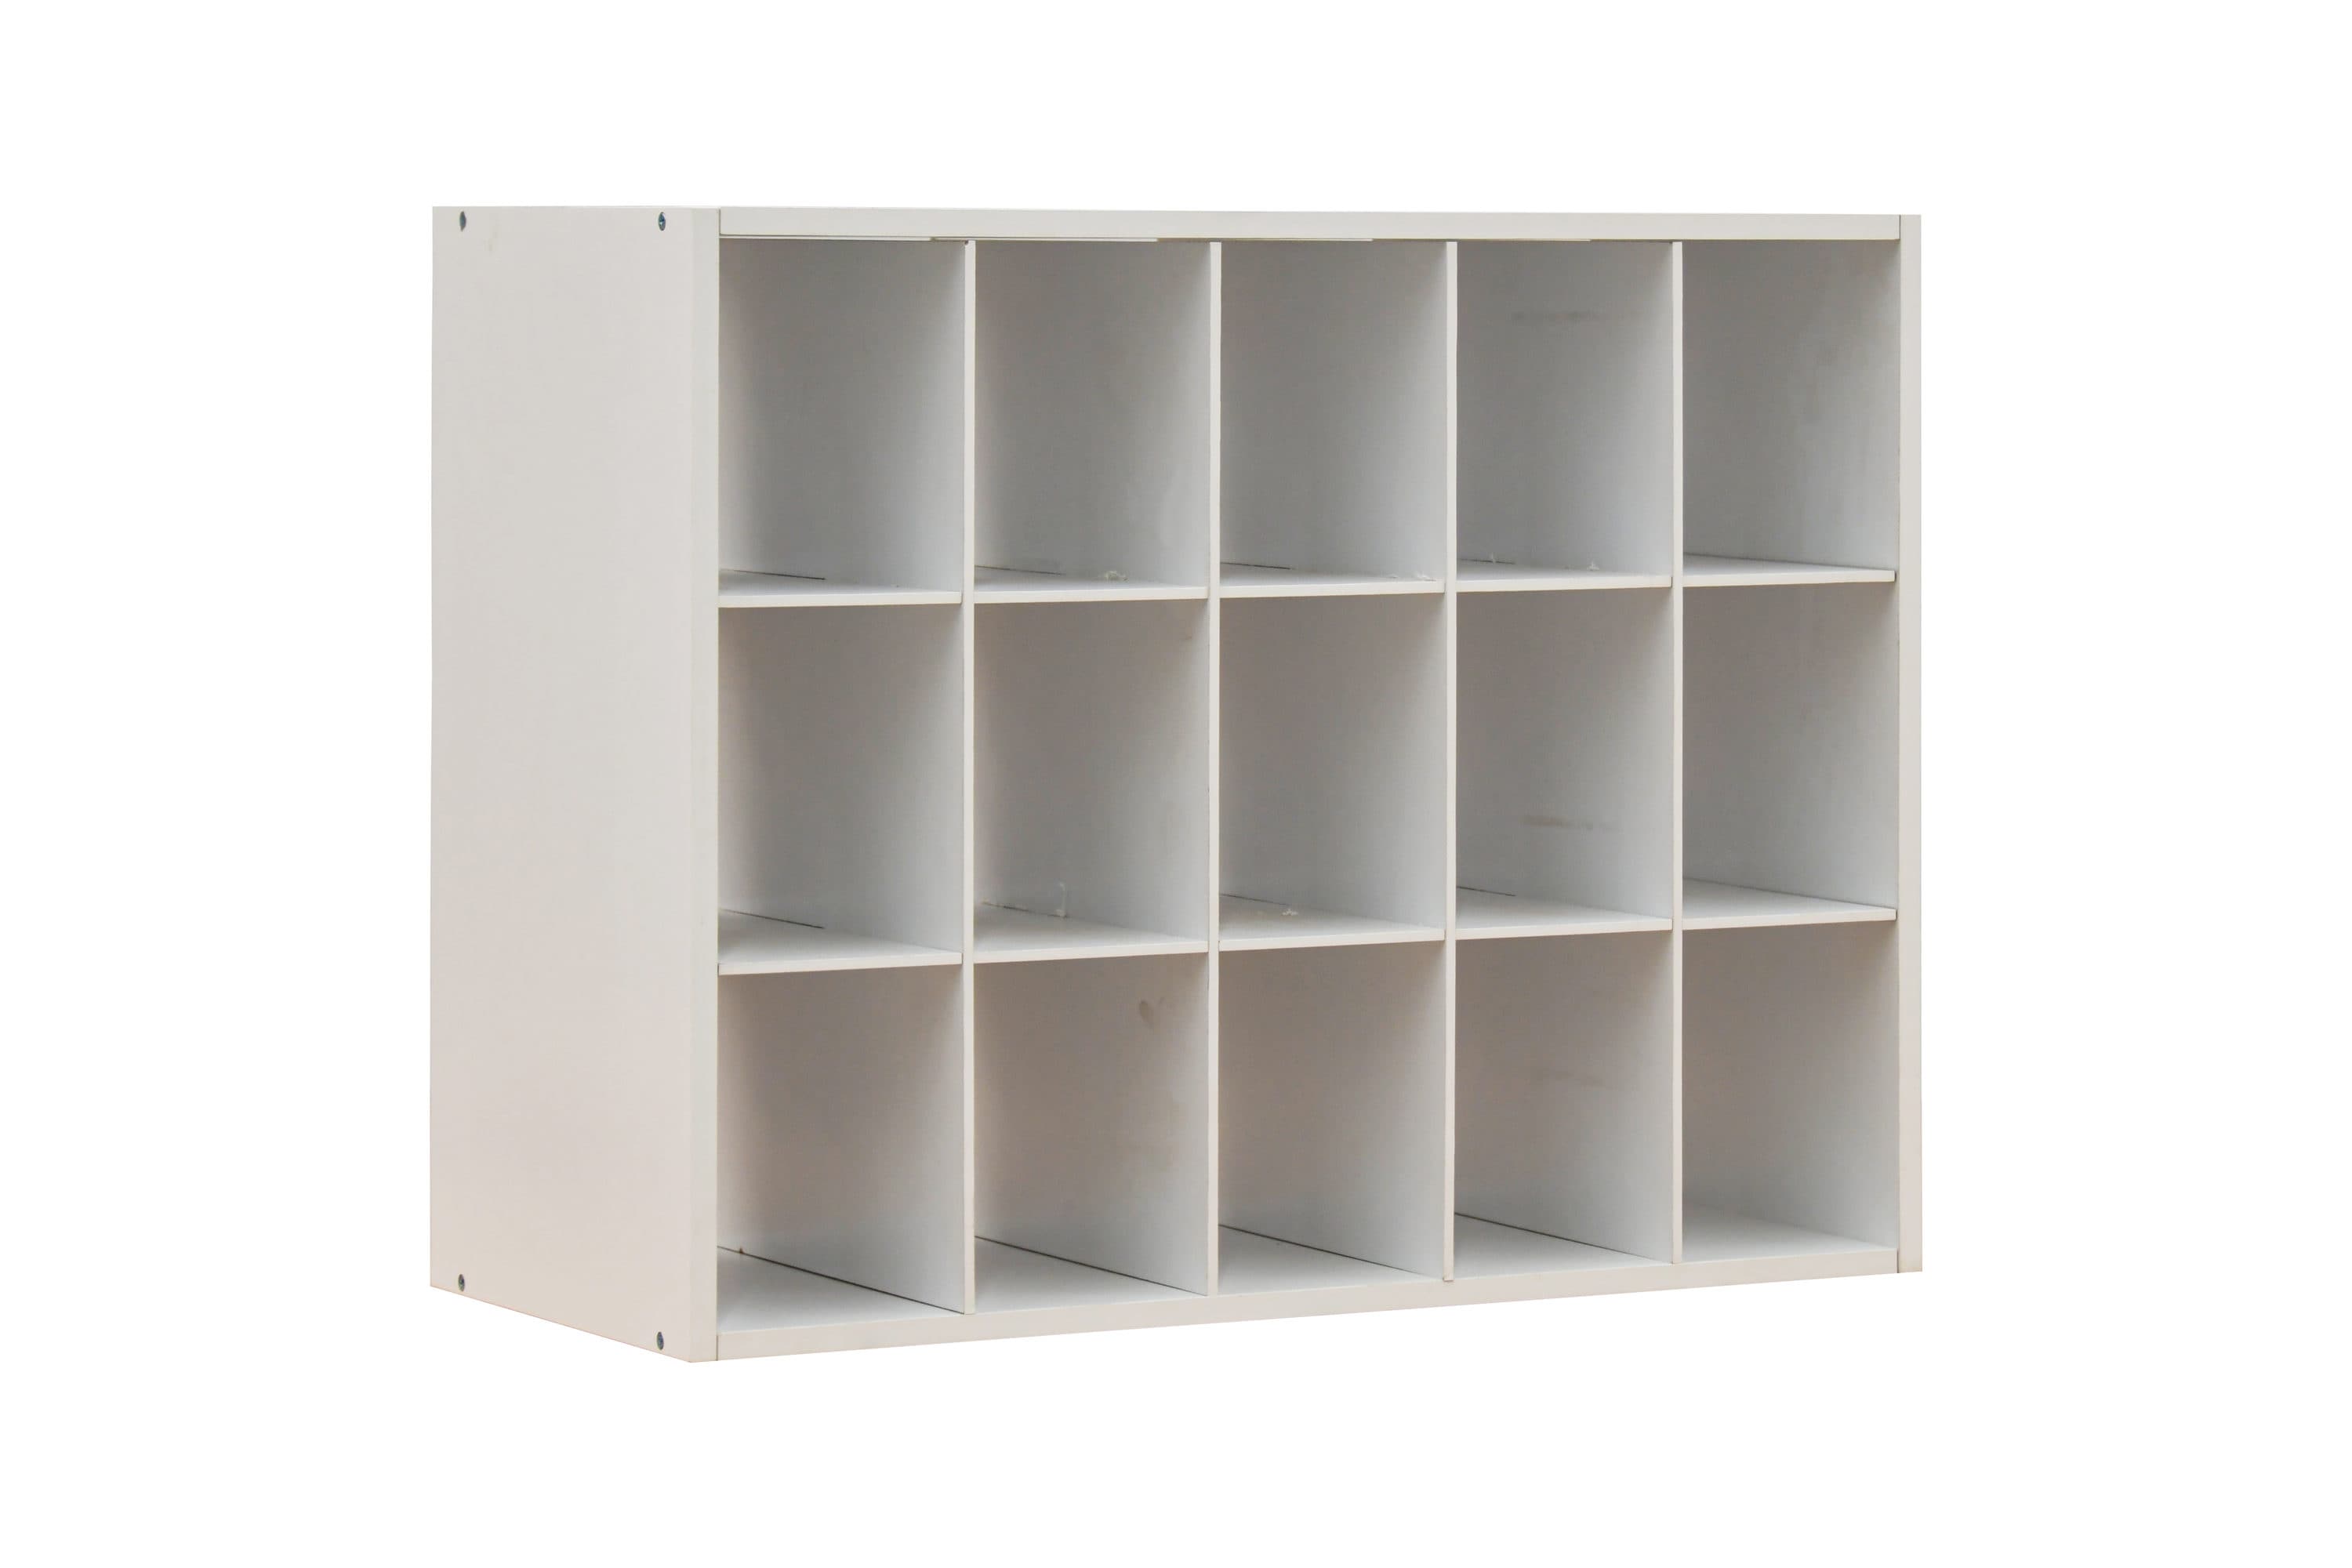 15 Cubes Storage Organizer - Cube Organizer